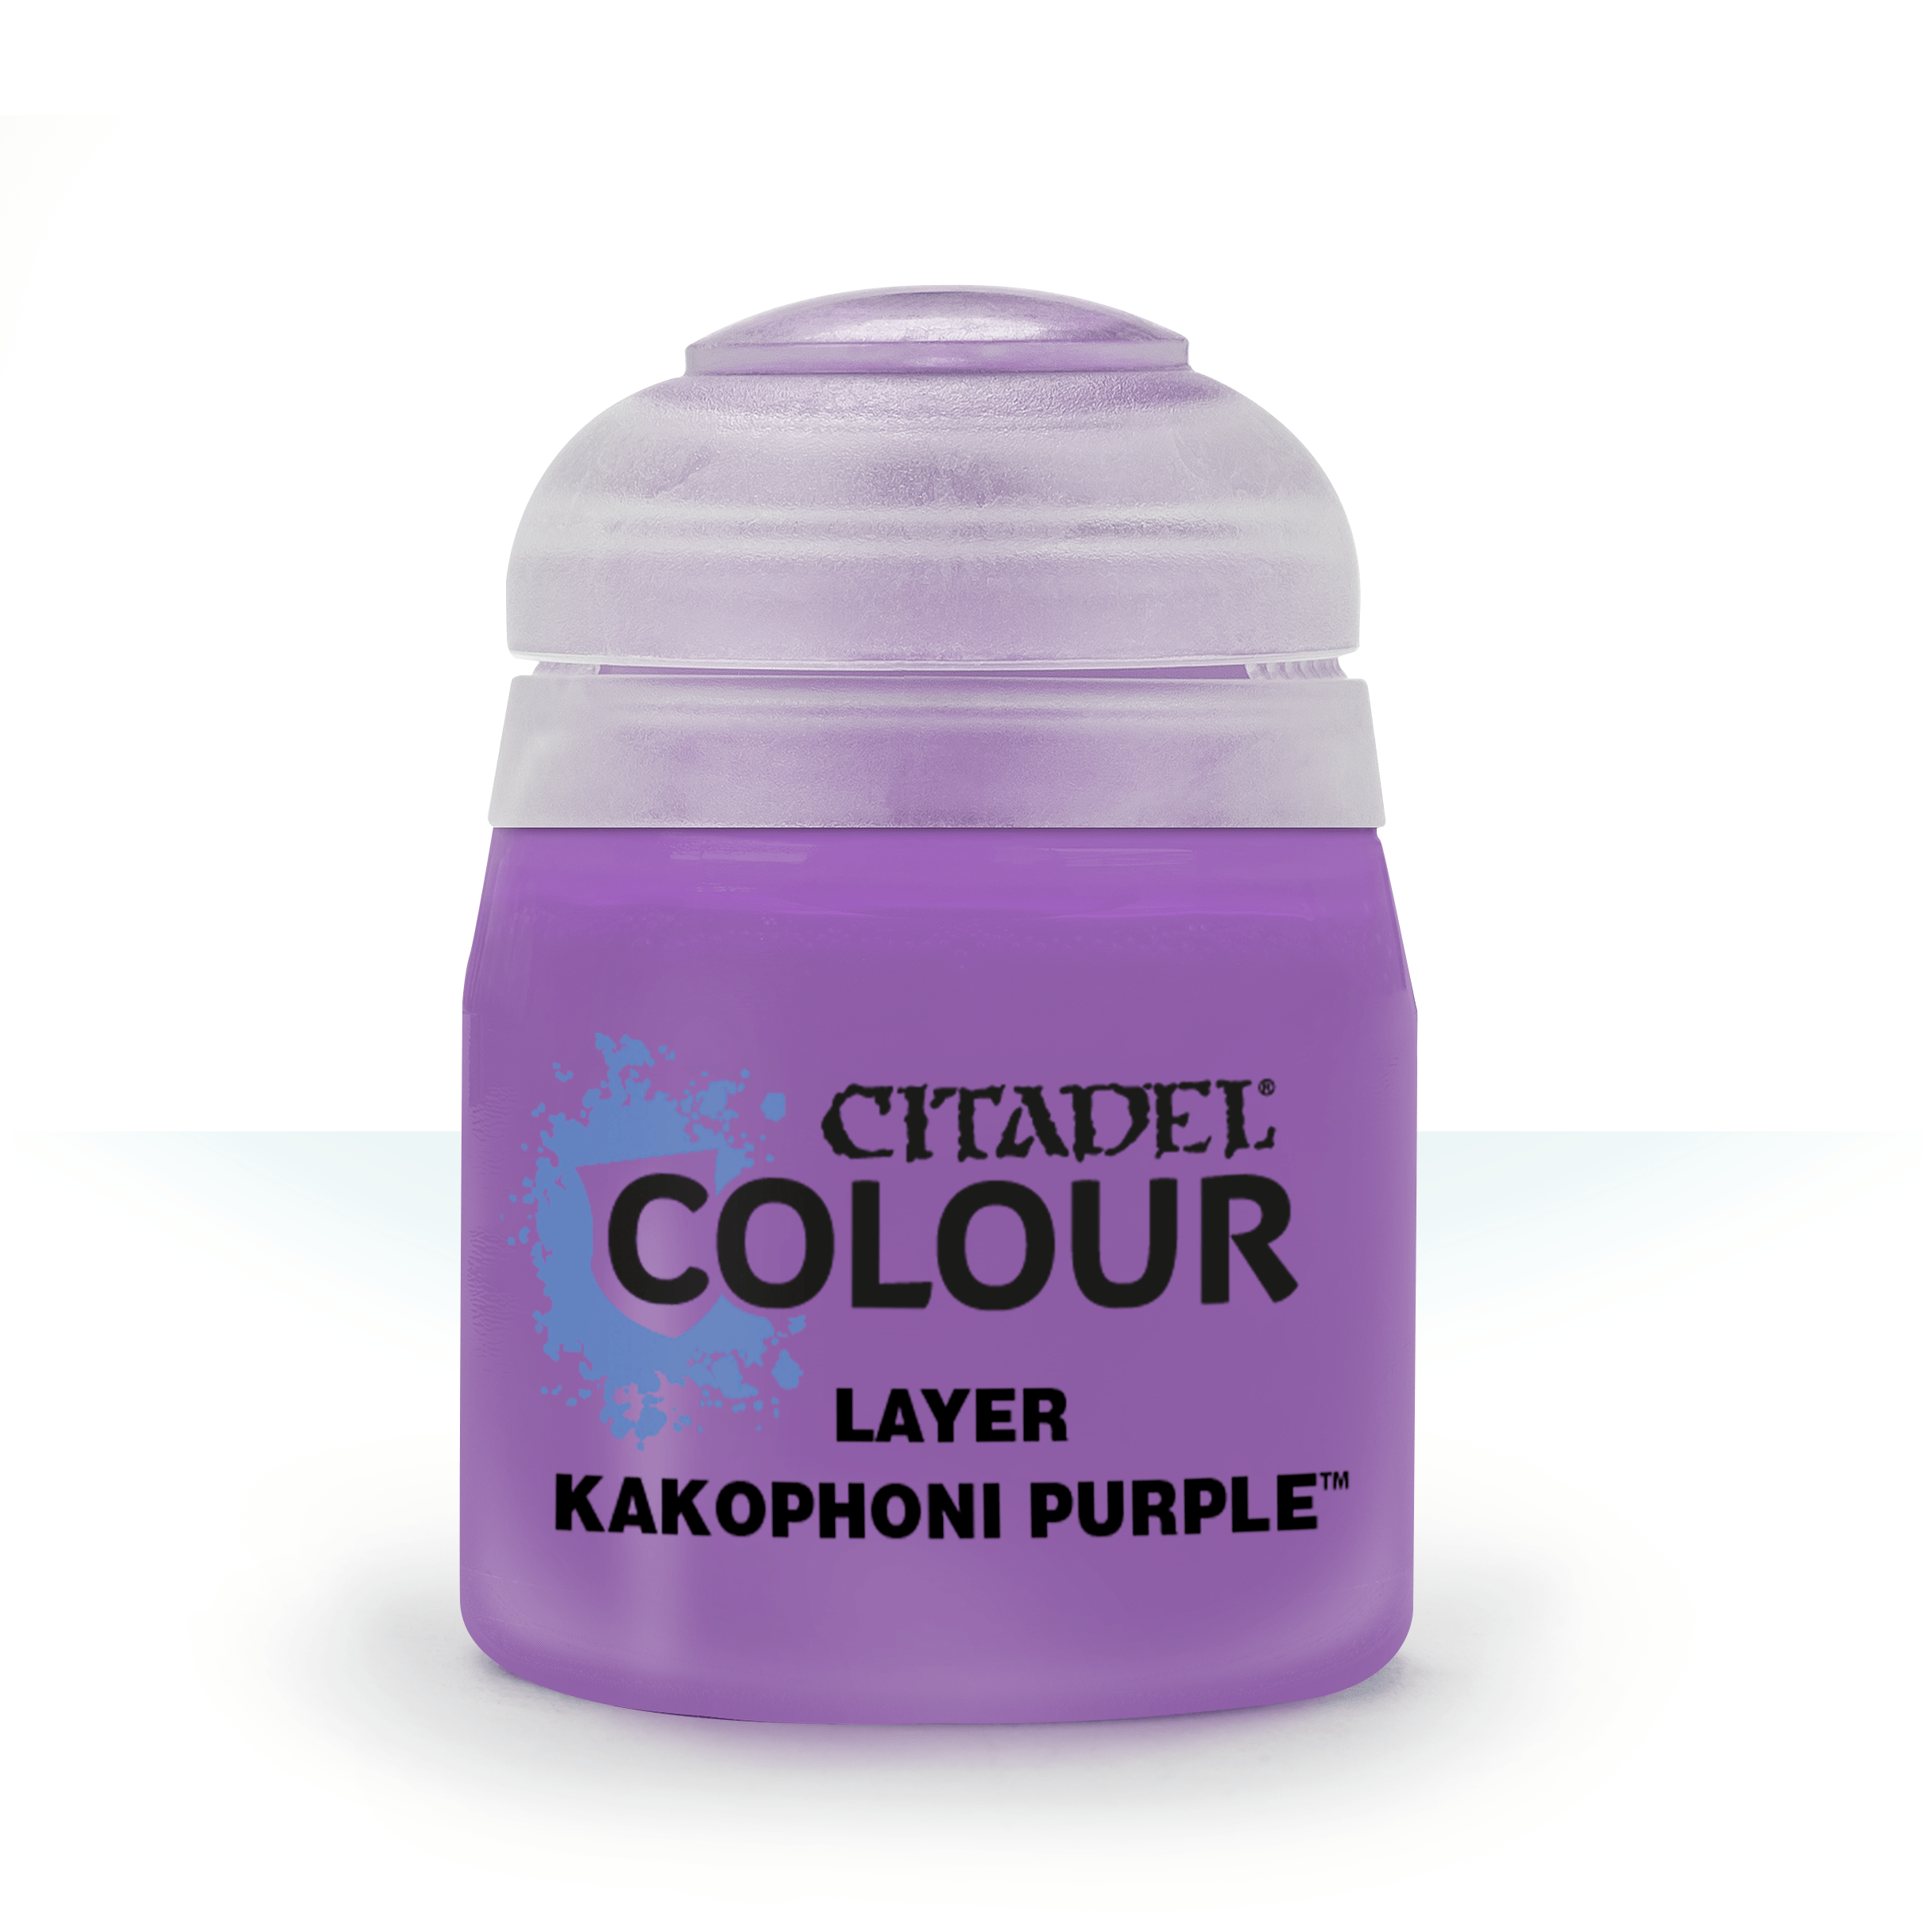 Layer Kakophoni Purple - Citadel Colour